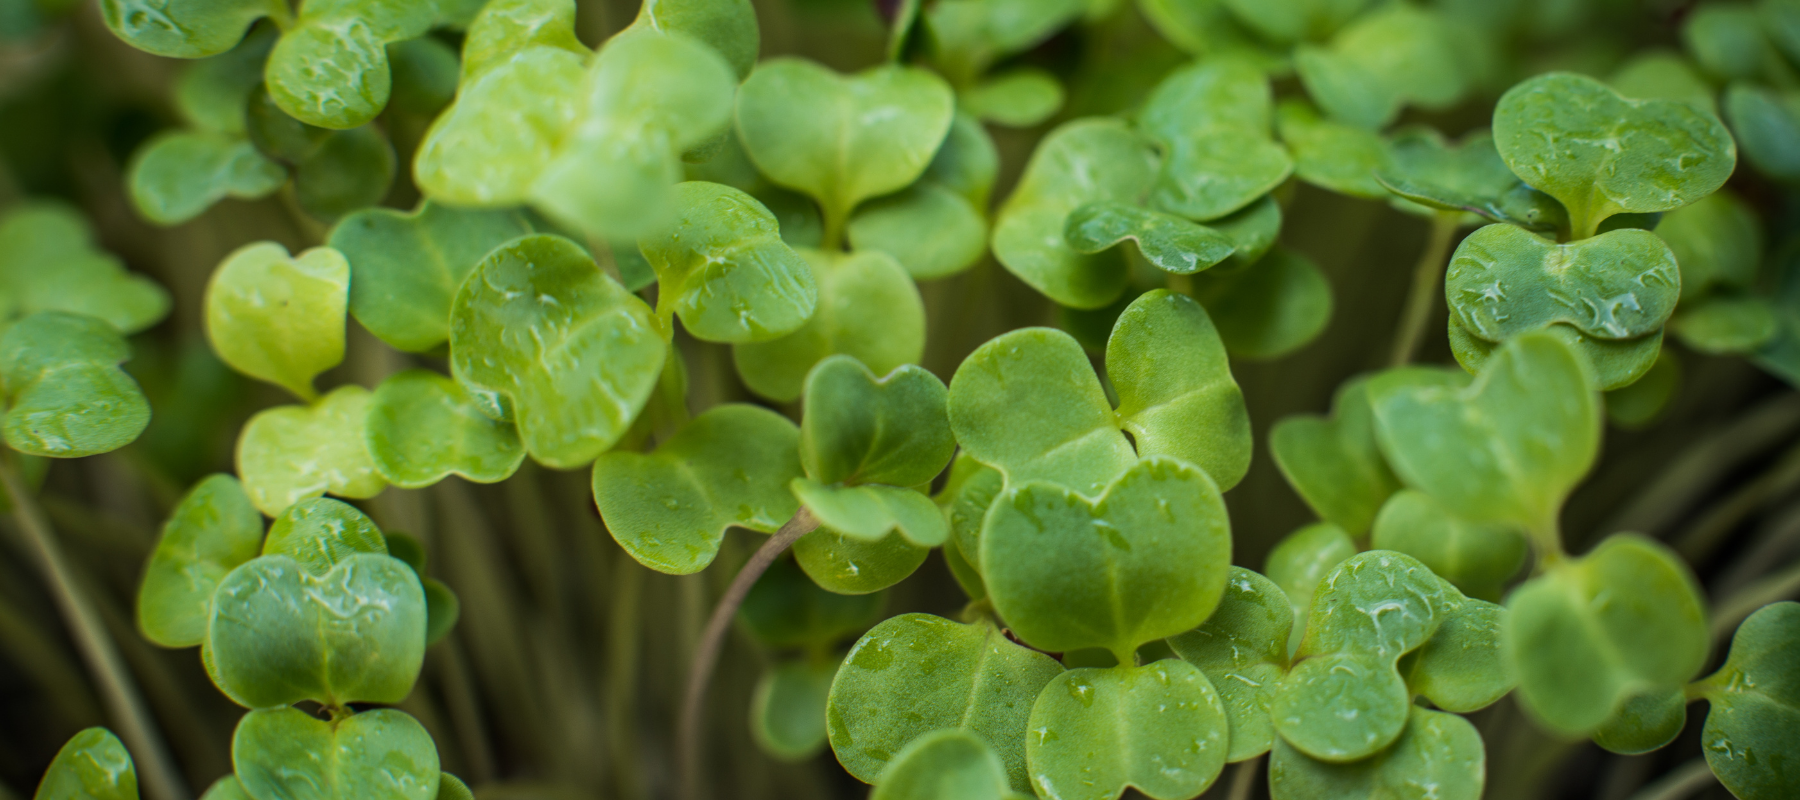 Top tips on how to grow microgreens